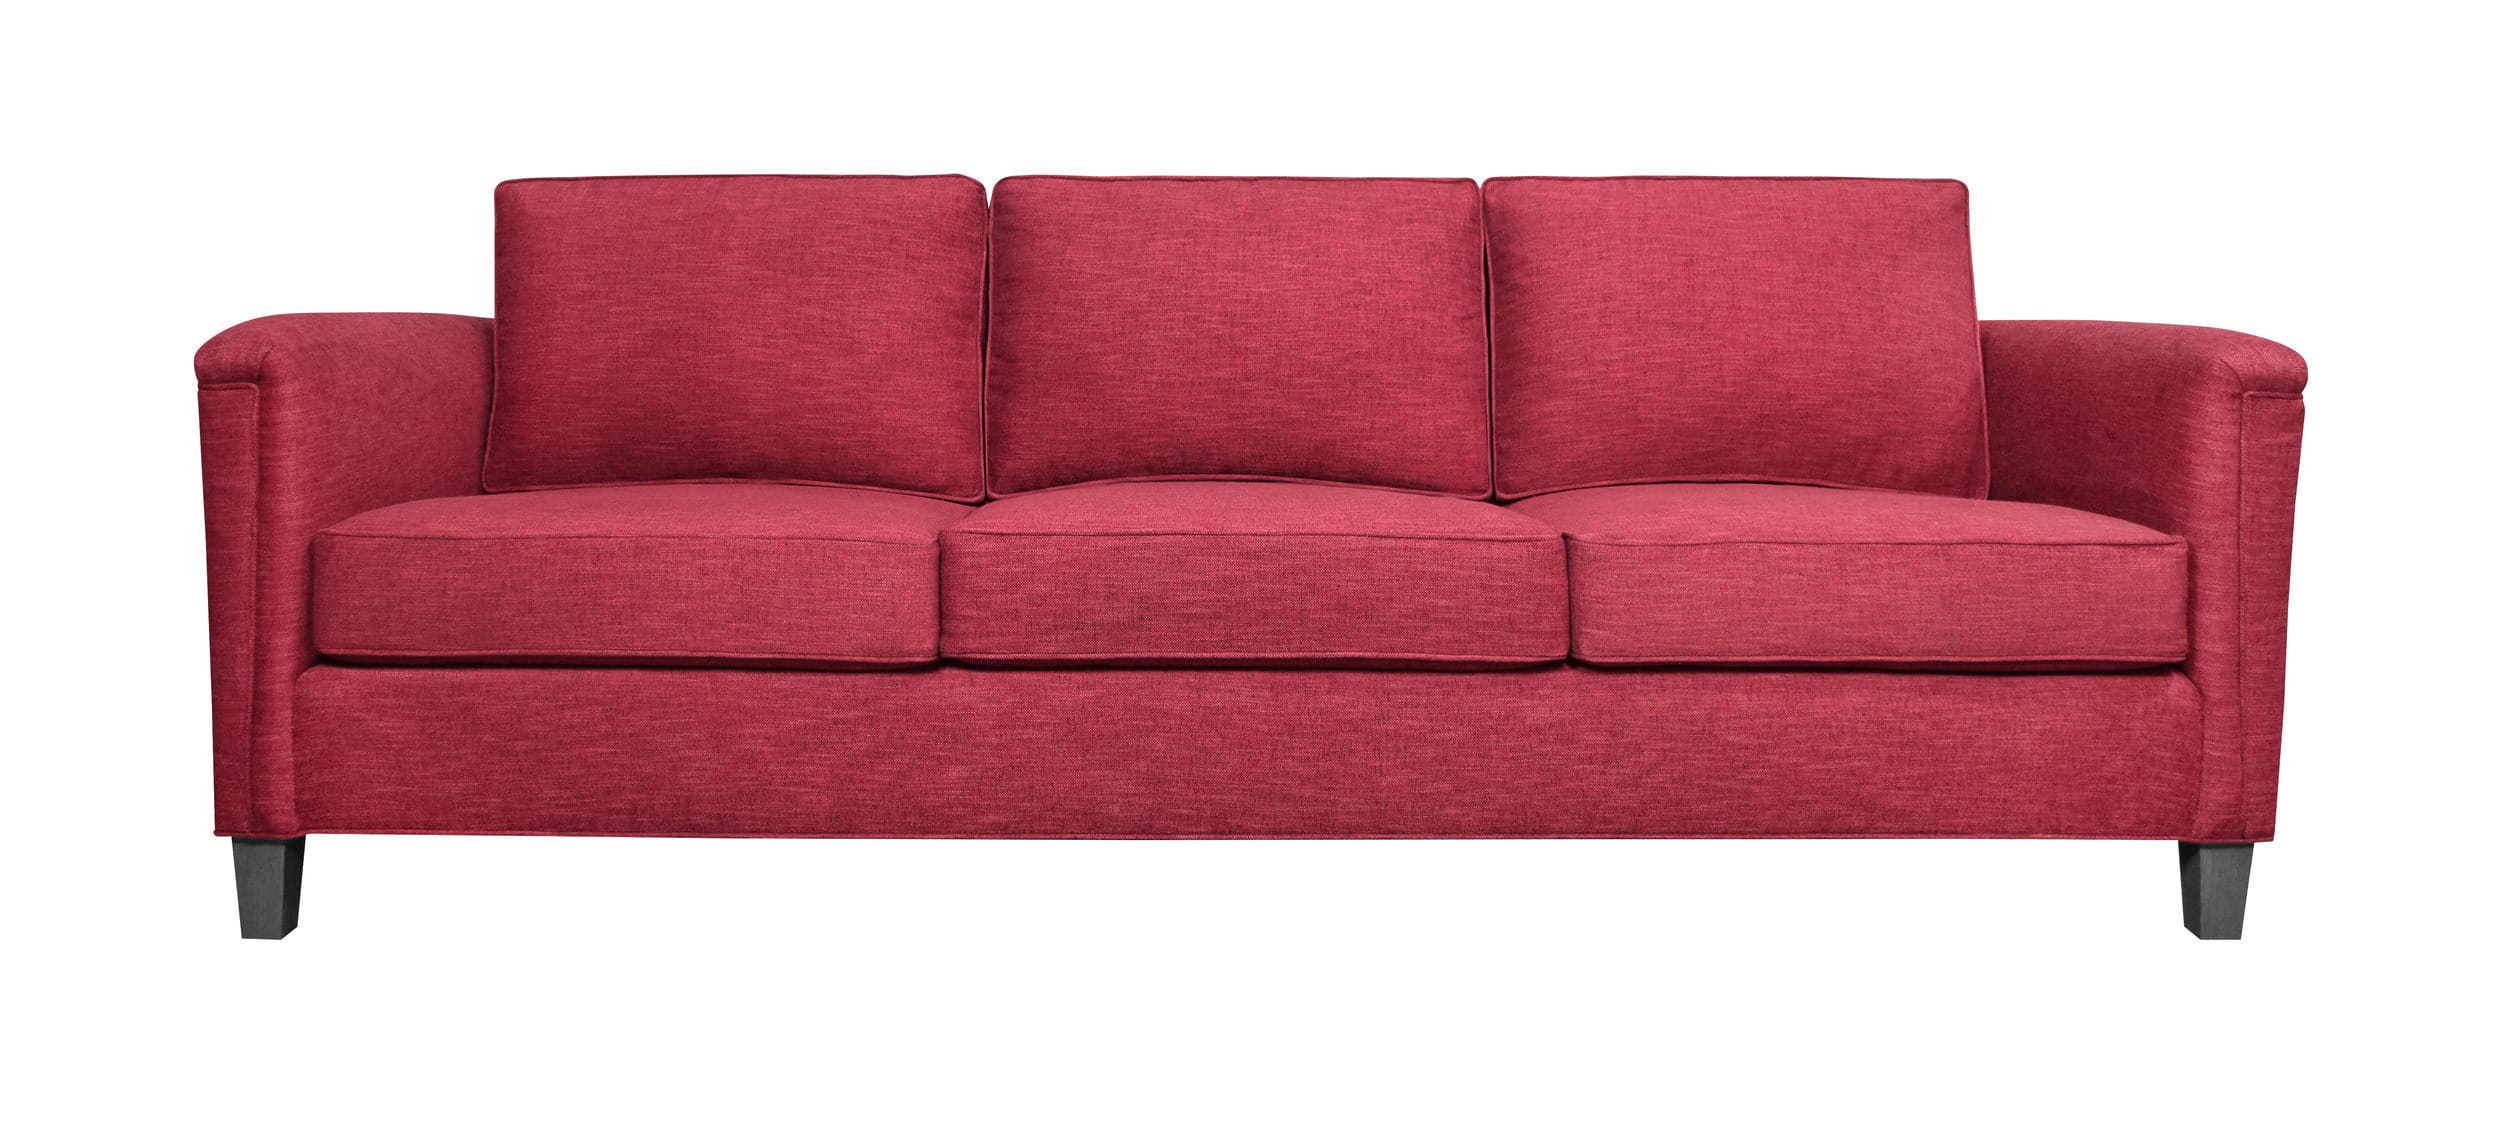 Tom Organic Sofa - no flame retardants of PFAS - Made in the USA - Pure  Upholstery